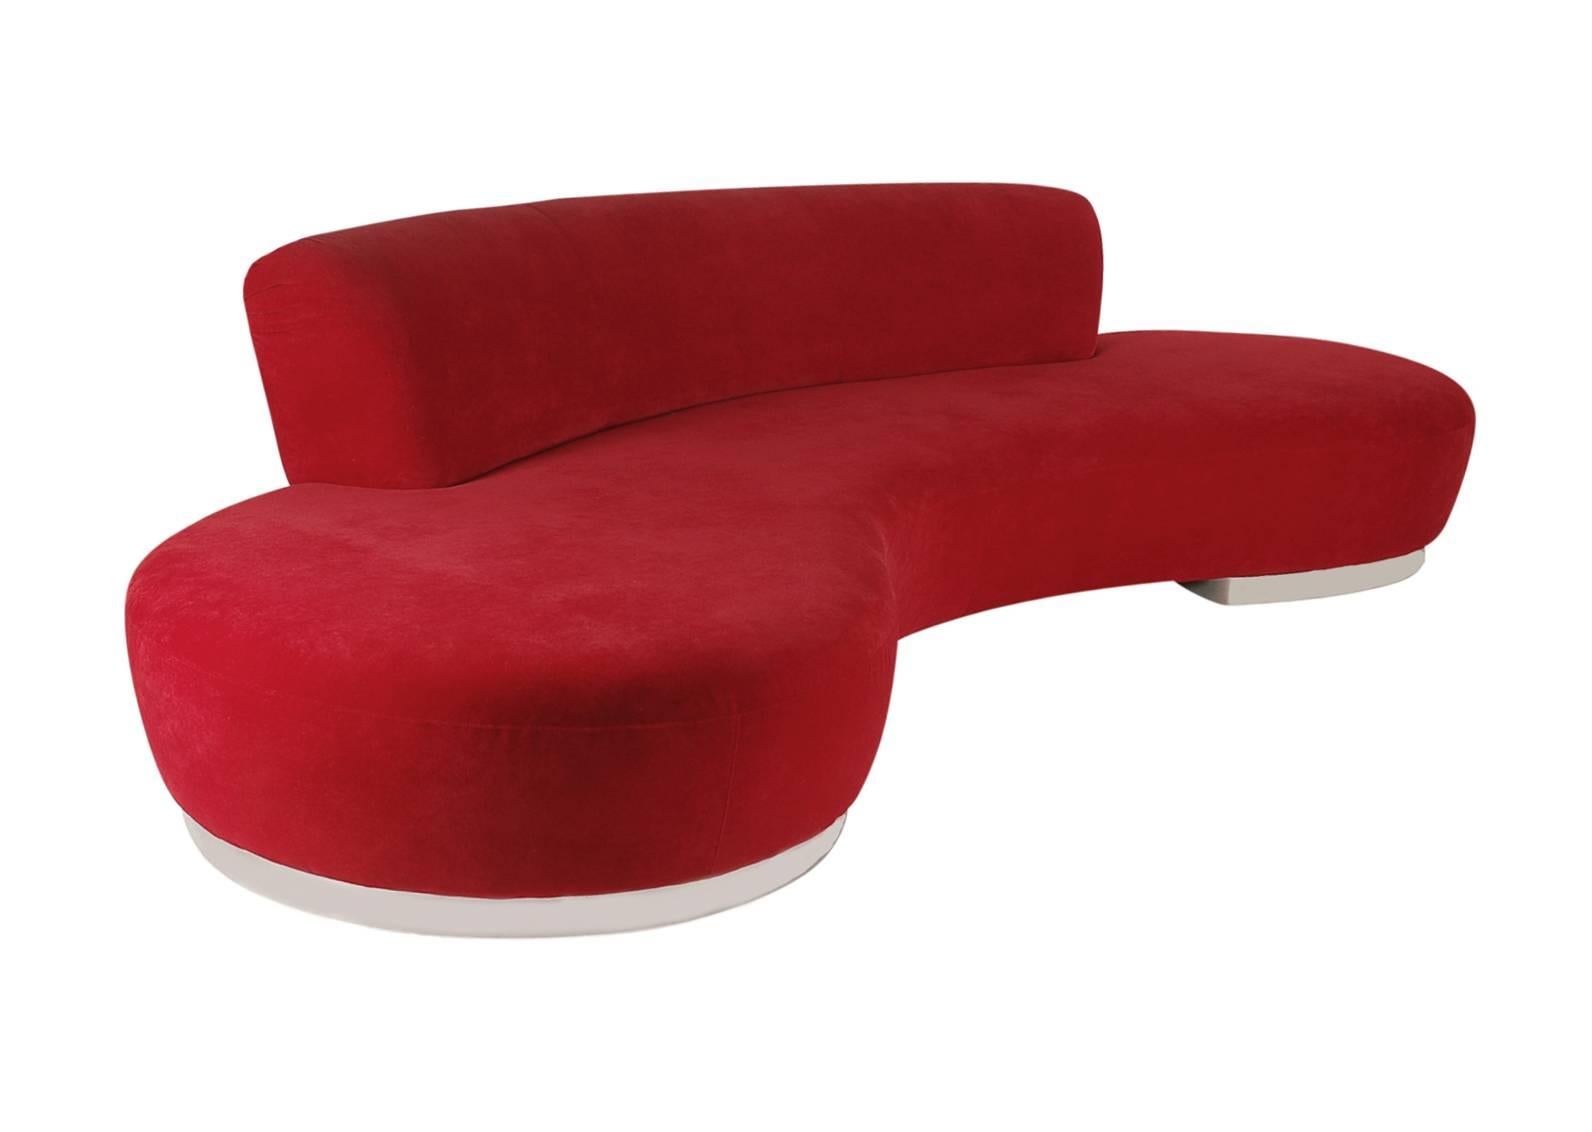 Late 20th Century Mid-Century Modern Curved Serpentine Sofa attributed to Vladimir Kagan